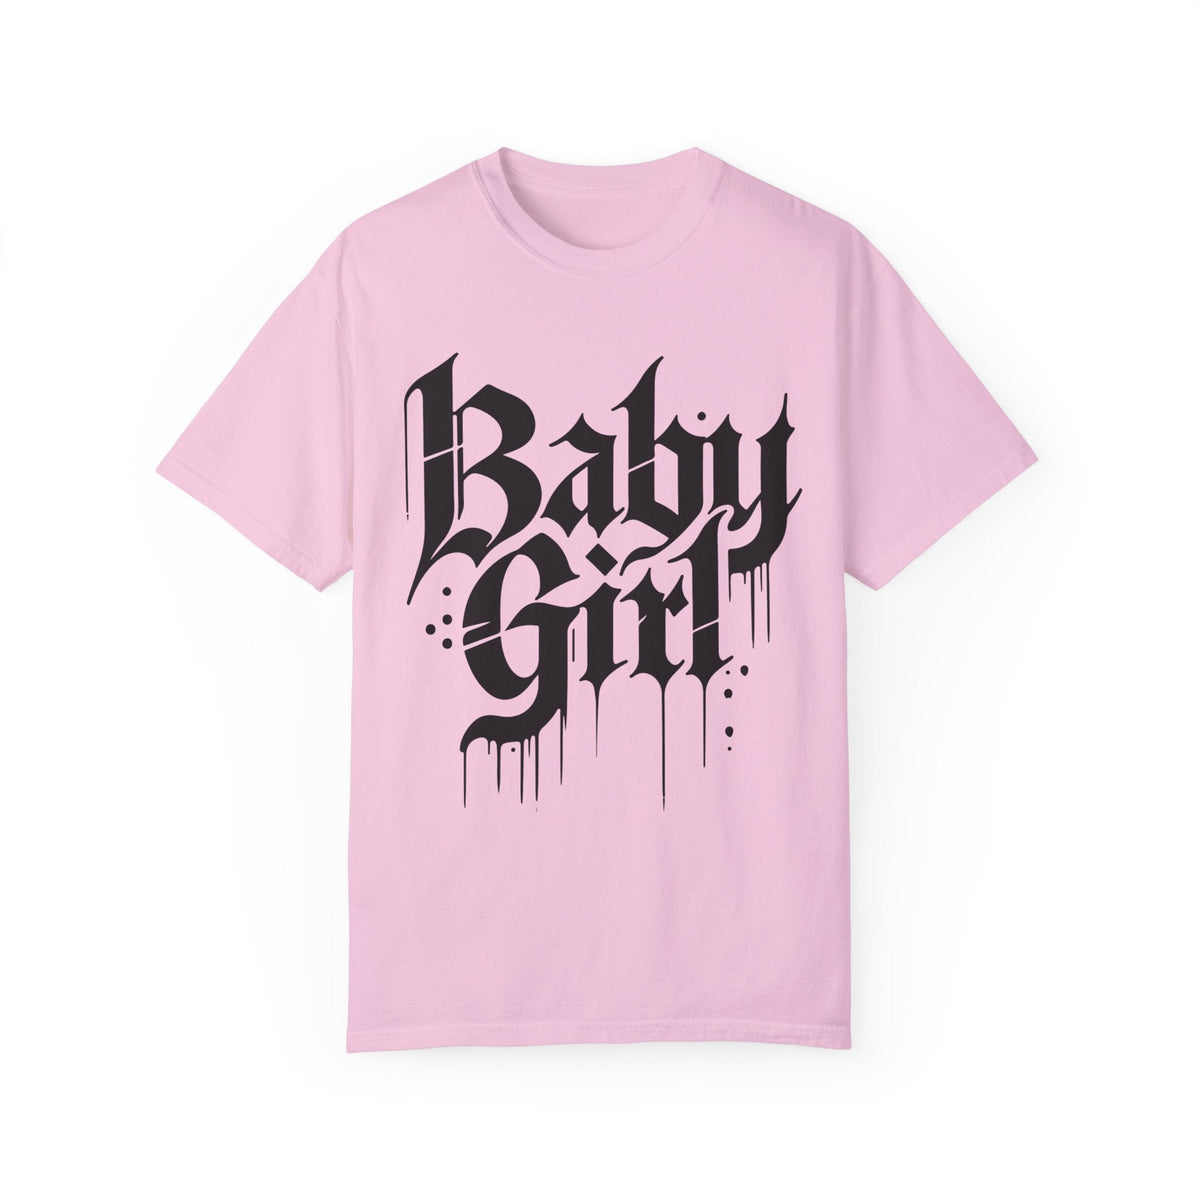 Baby Girl Comfort Tee - Goth Cloth Co.T - Shirt31394600502922628121